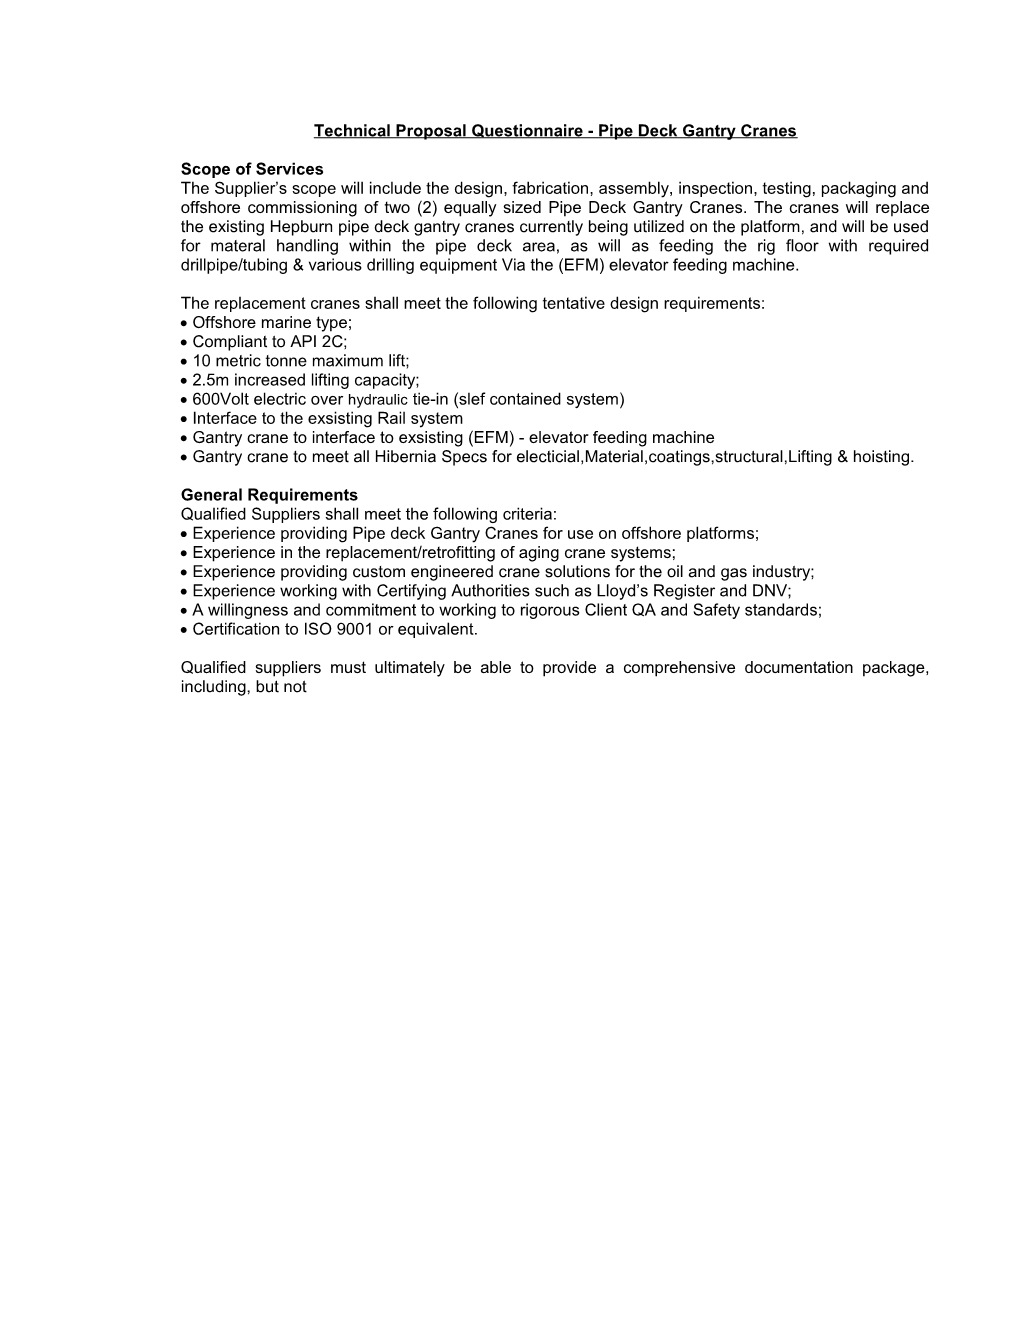 Pleasdraft Angola DD-MWD-LWD Technical Bid Submission Requirements 6-5-12